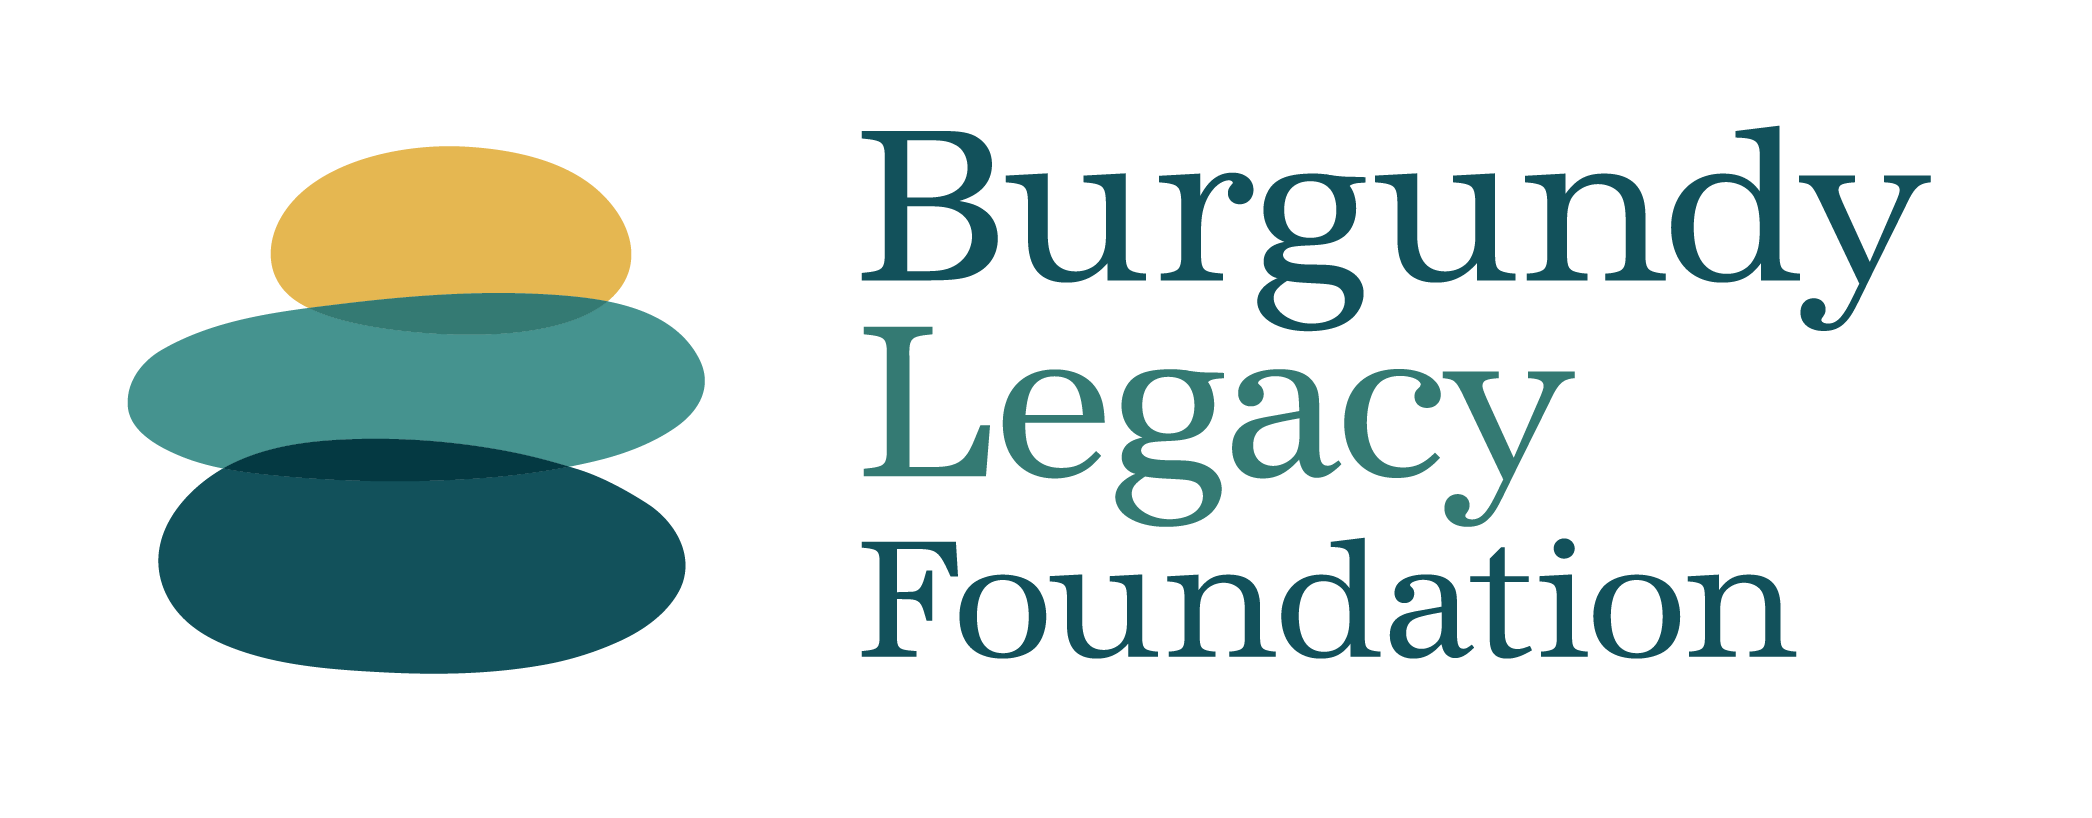 Burgundy Legacy Foundation logo